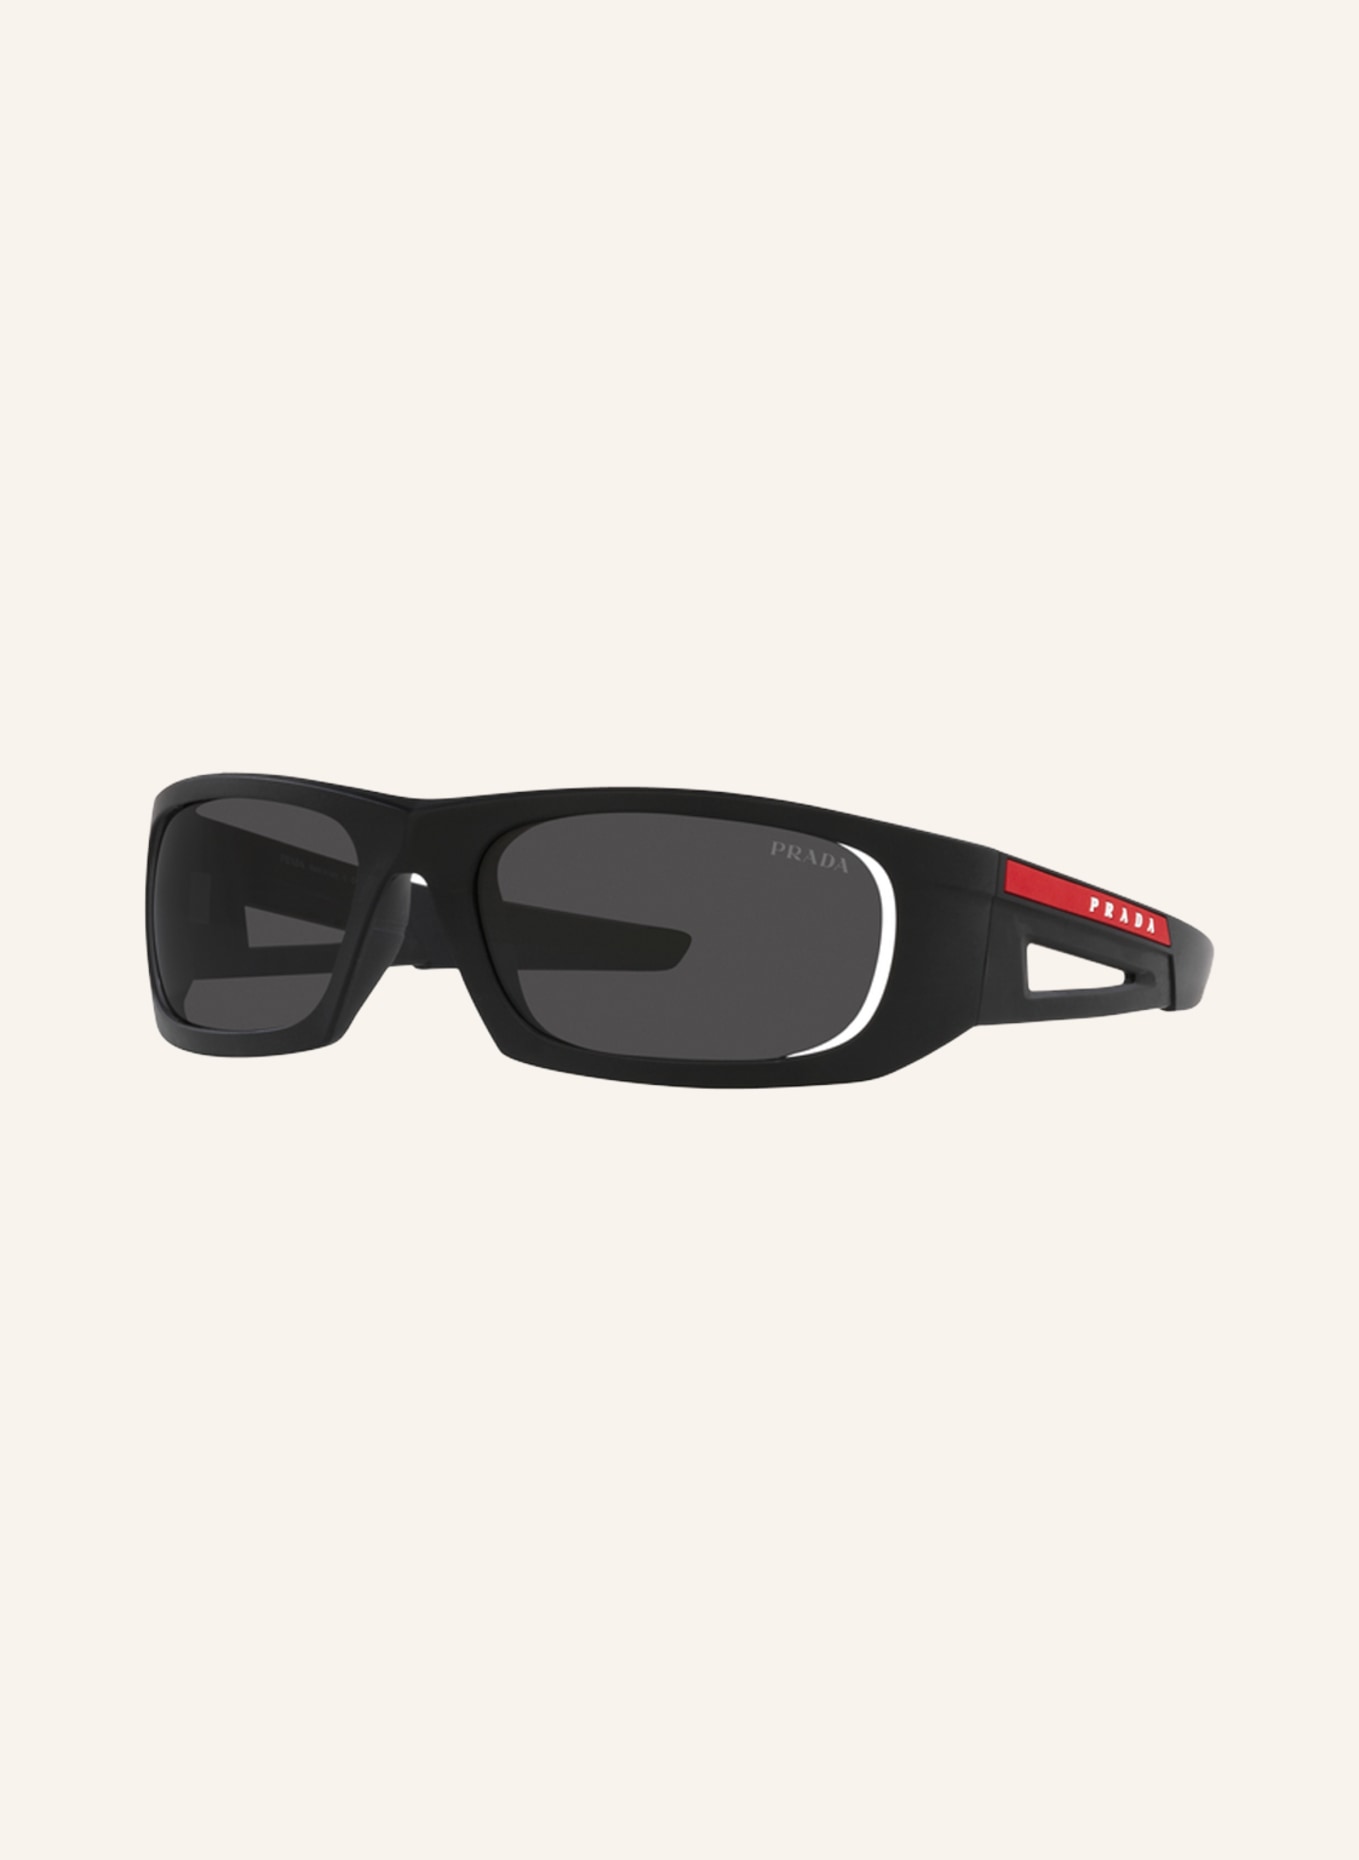 PRADA LINEA ROSSA Sunglasses PS 02YS in 1bo06f - matte black/ dark gray |  Breuninger